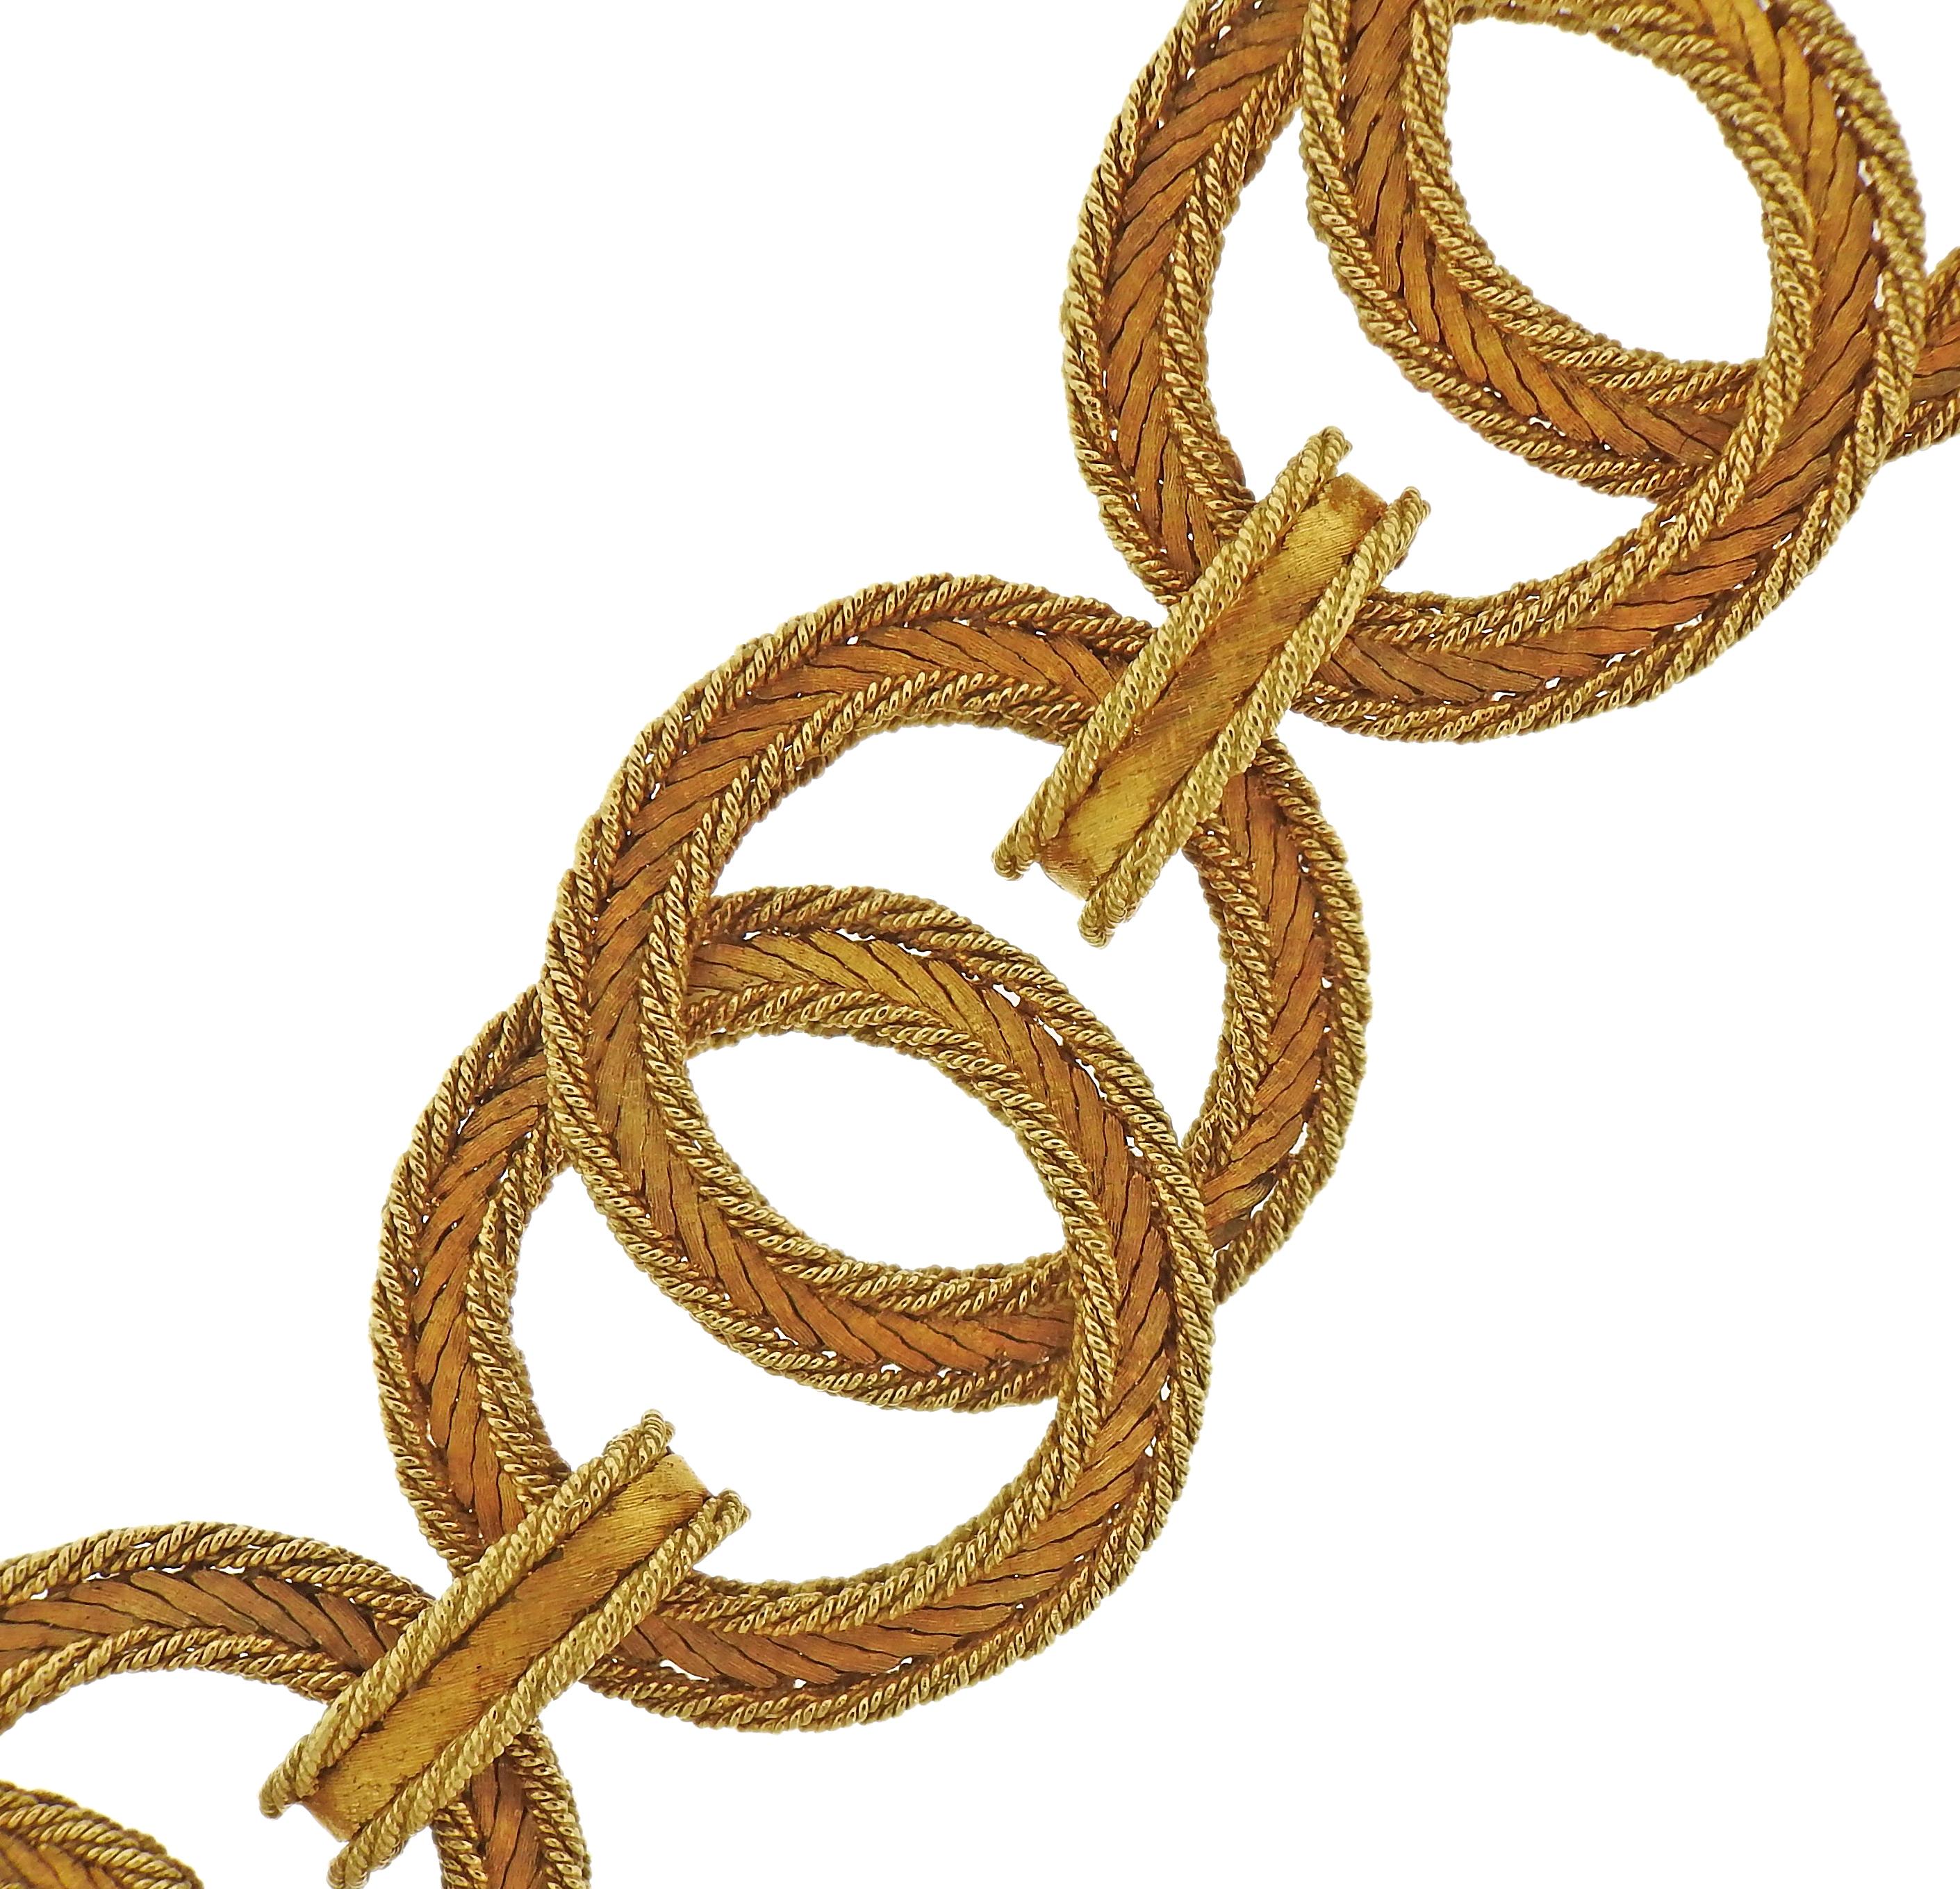 Large 18k yellow gold bracelet, featuring interlocked circle links in signature woven pattern, designer by Mario Buccellati. Bracelet is 7.75